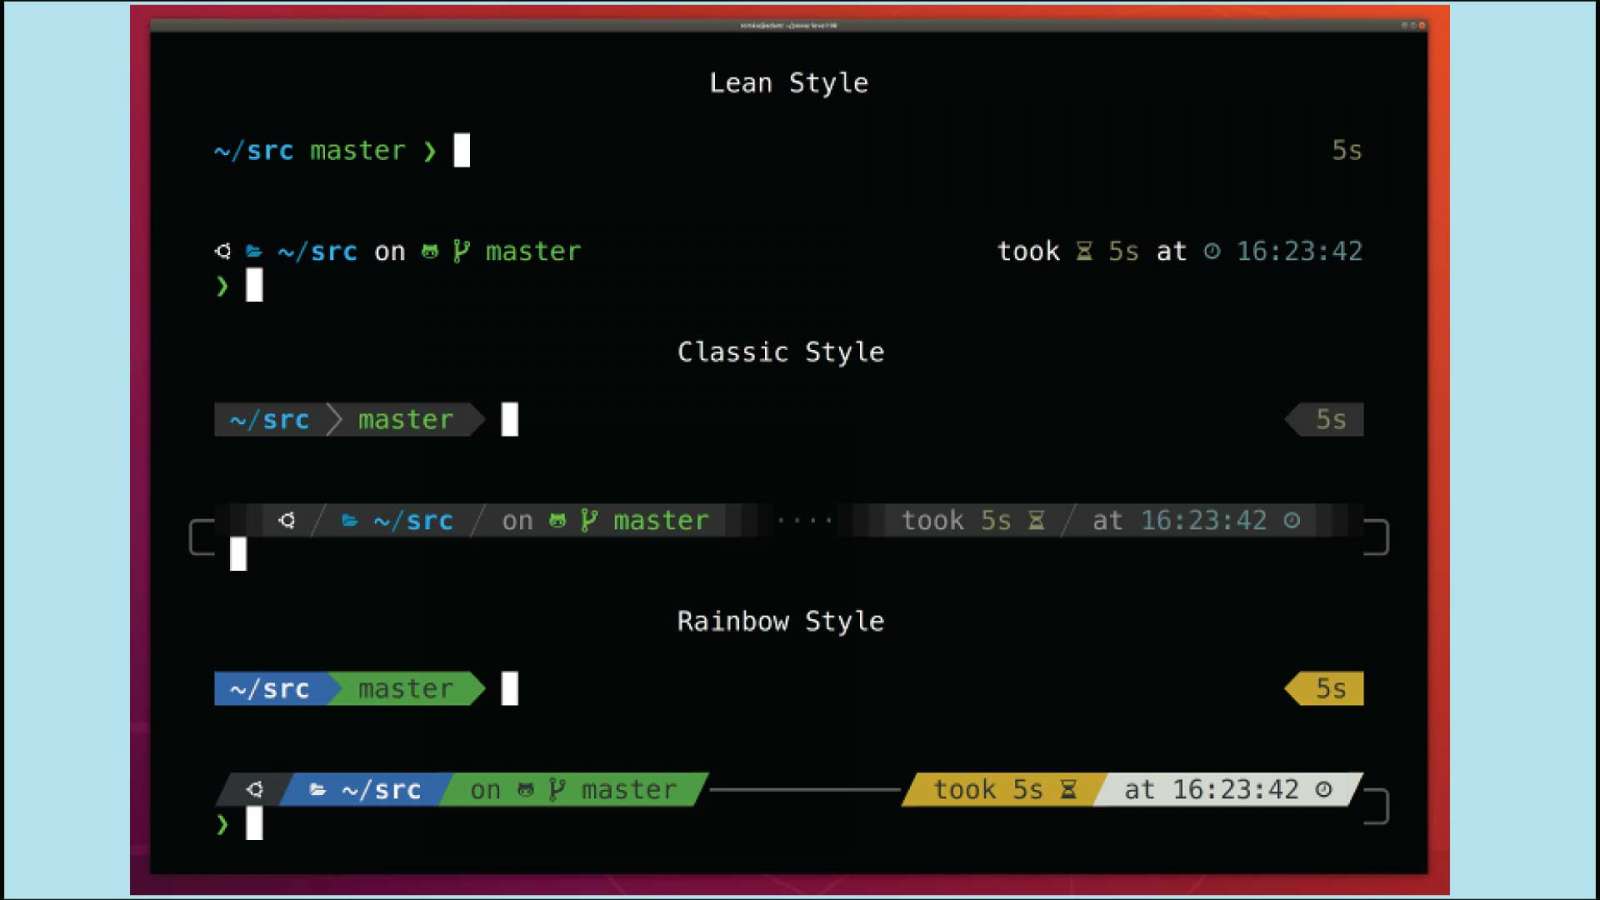 Install theme Powerlevel10k for WSL2 on Ubuntu, Debian (Windows 10 WSL)